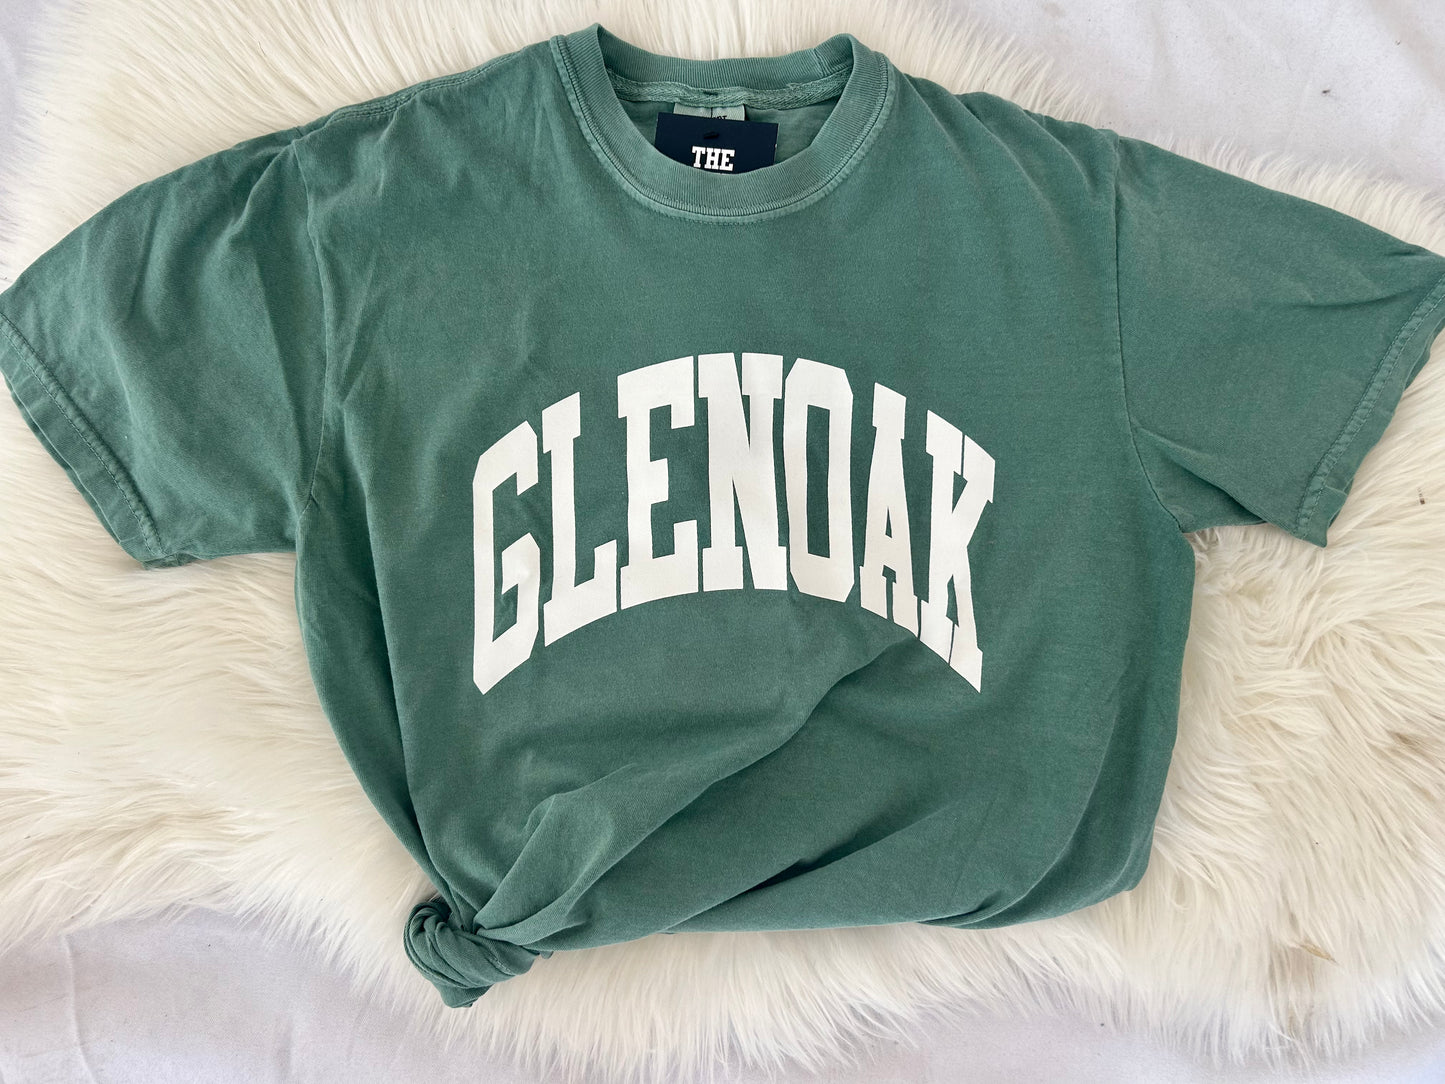 Glenoak Vintage T-shirt